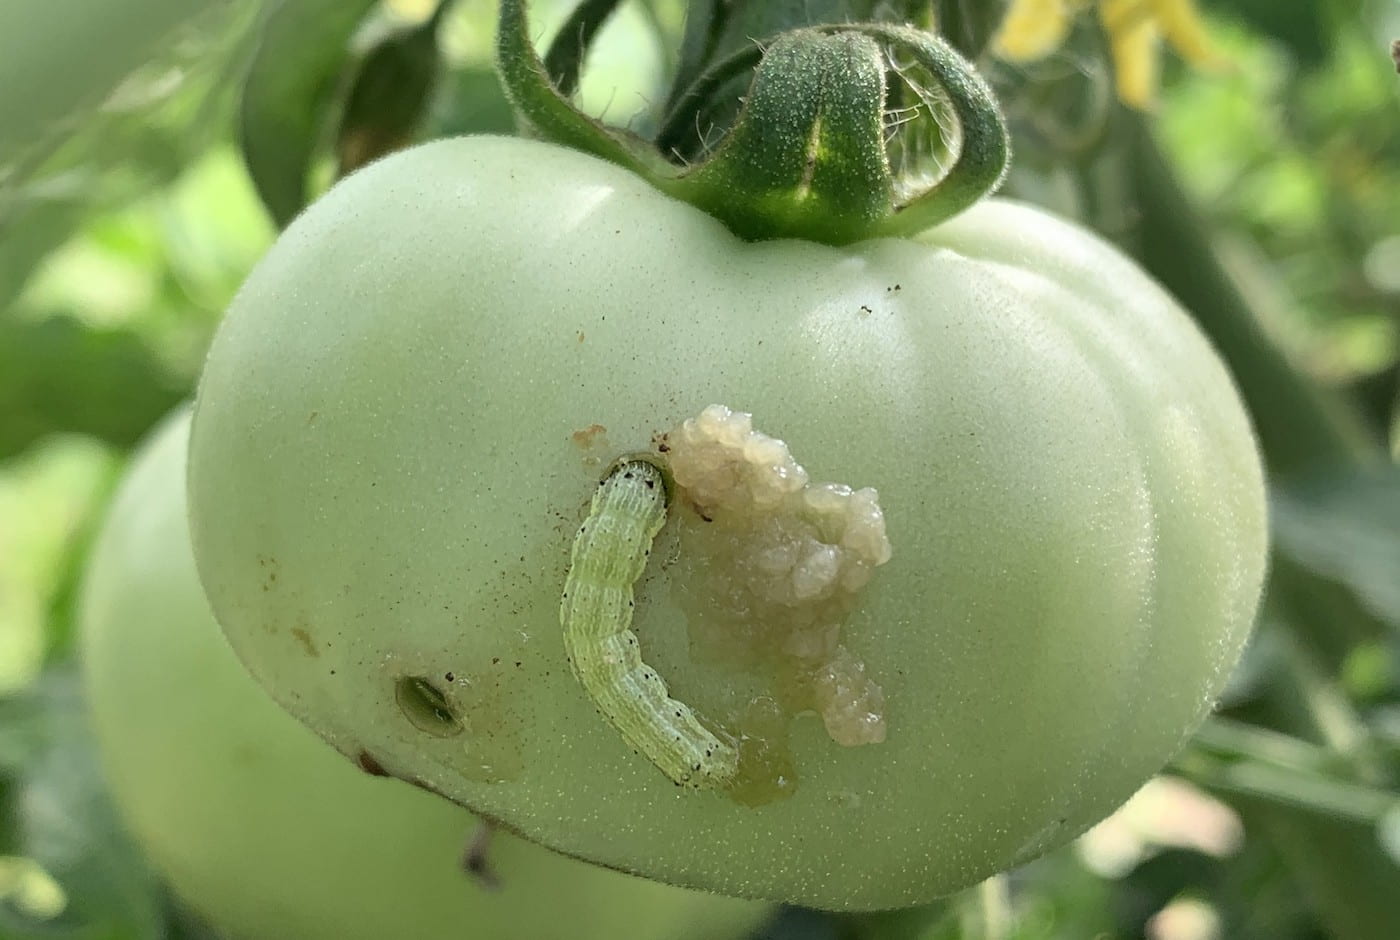 Pest Management in Arizona for Tomato Plants